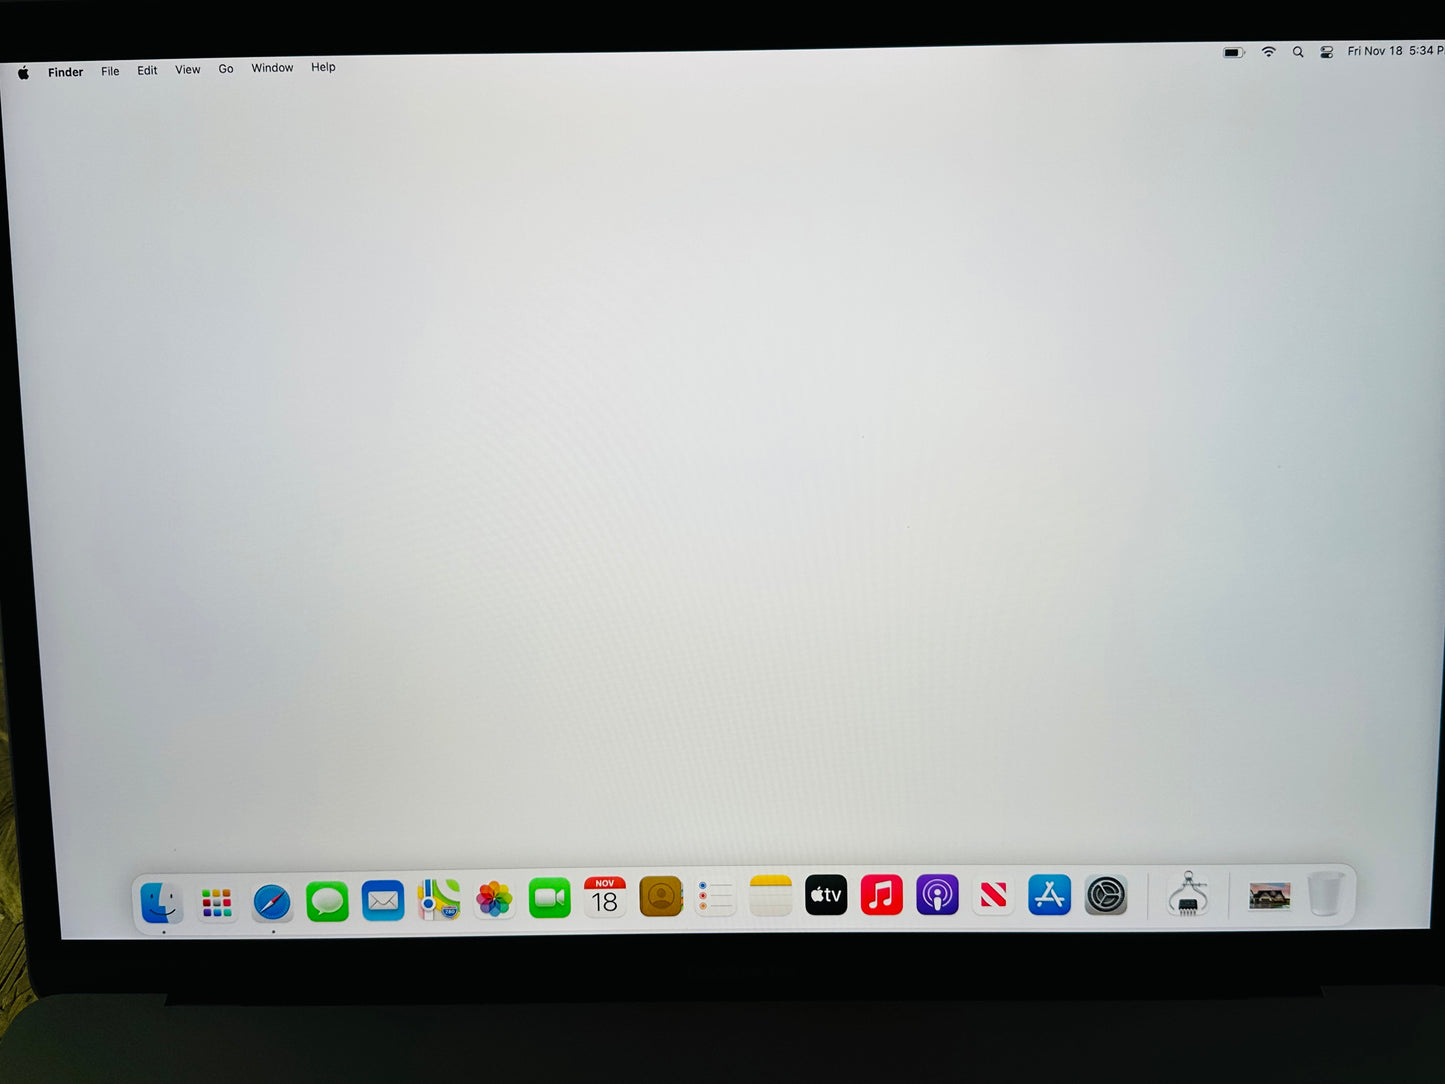 Apple 2018 15 in MacBook Pro TB 2.2GHz 6-Core i7 16GB RAM 256GB SSD RP555X 4GB